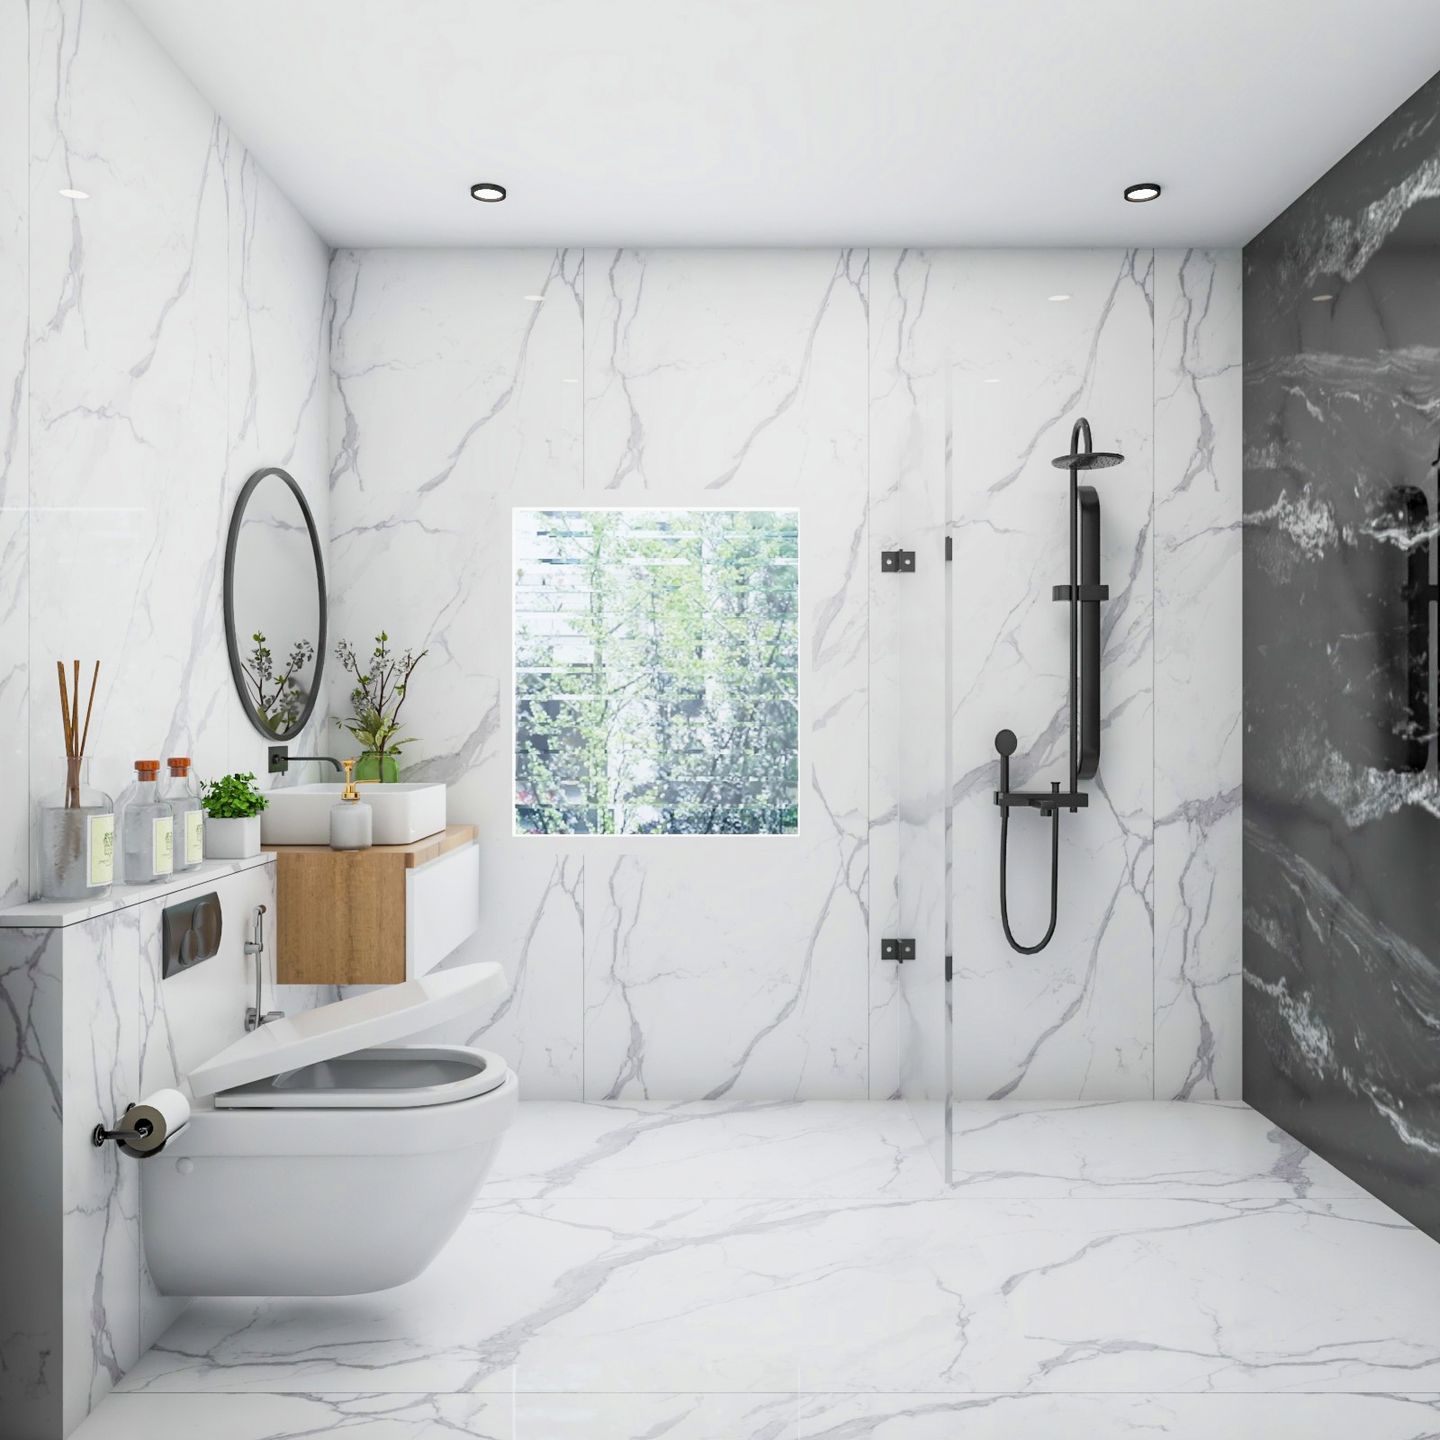 Bathroom Interior Design With Marble Walls - Livspace